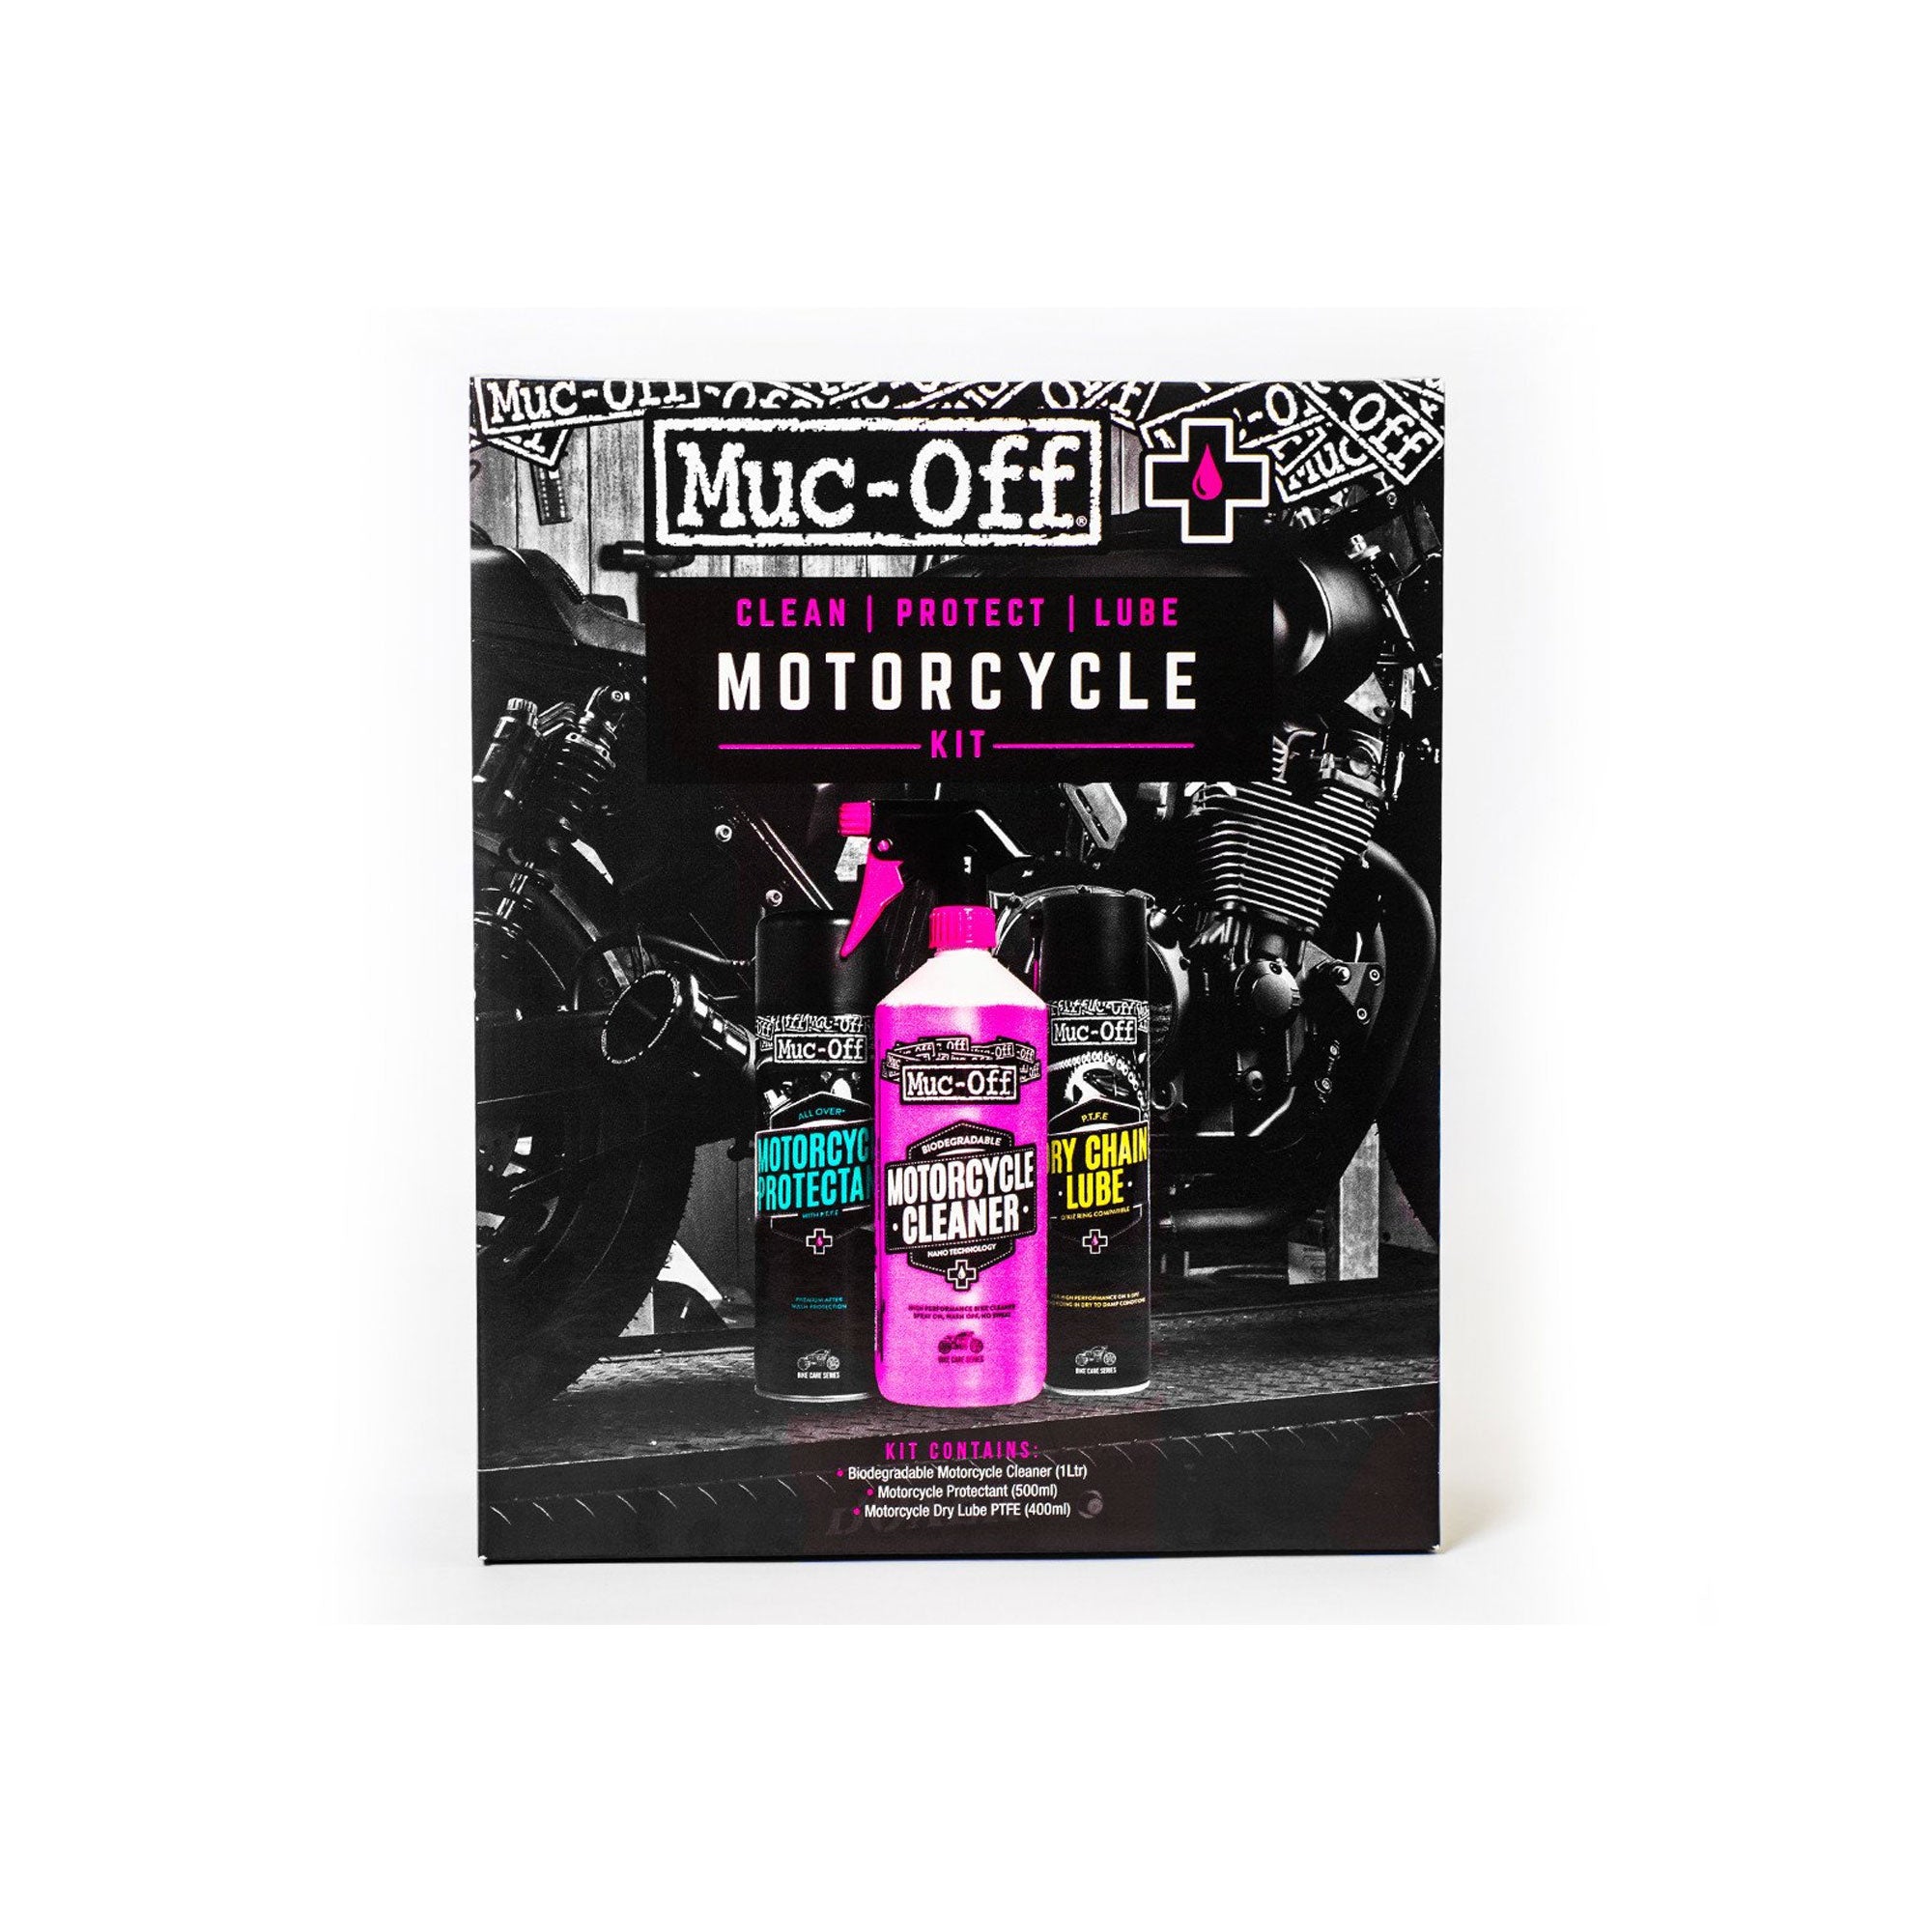 Muc-Off Motorcycle Kit